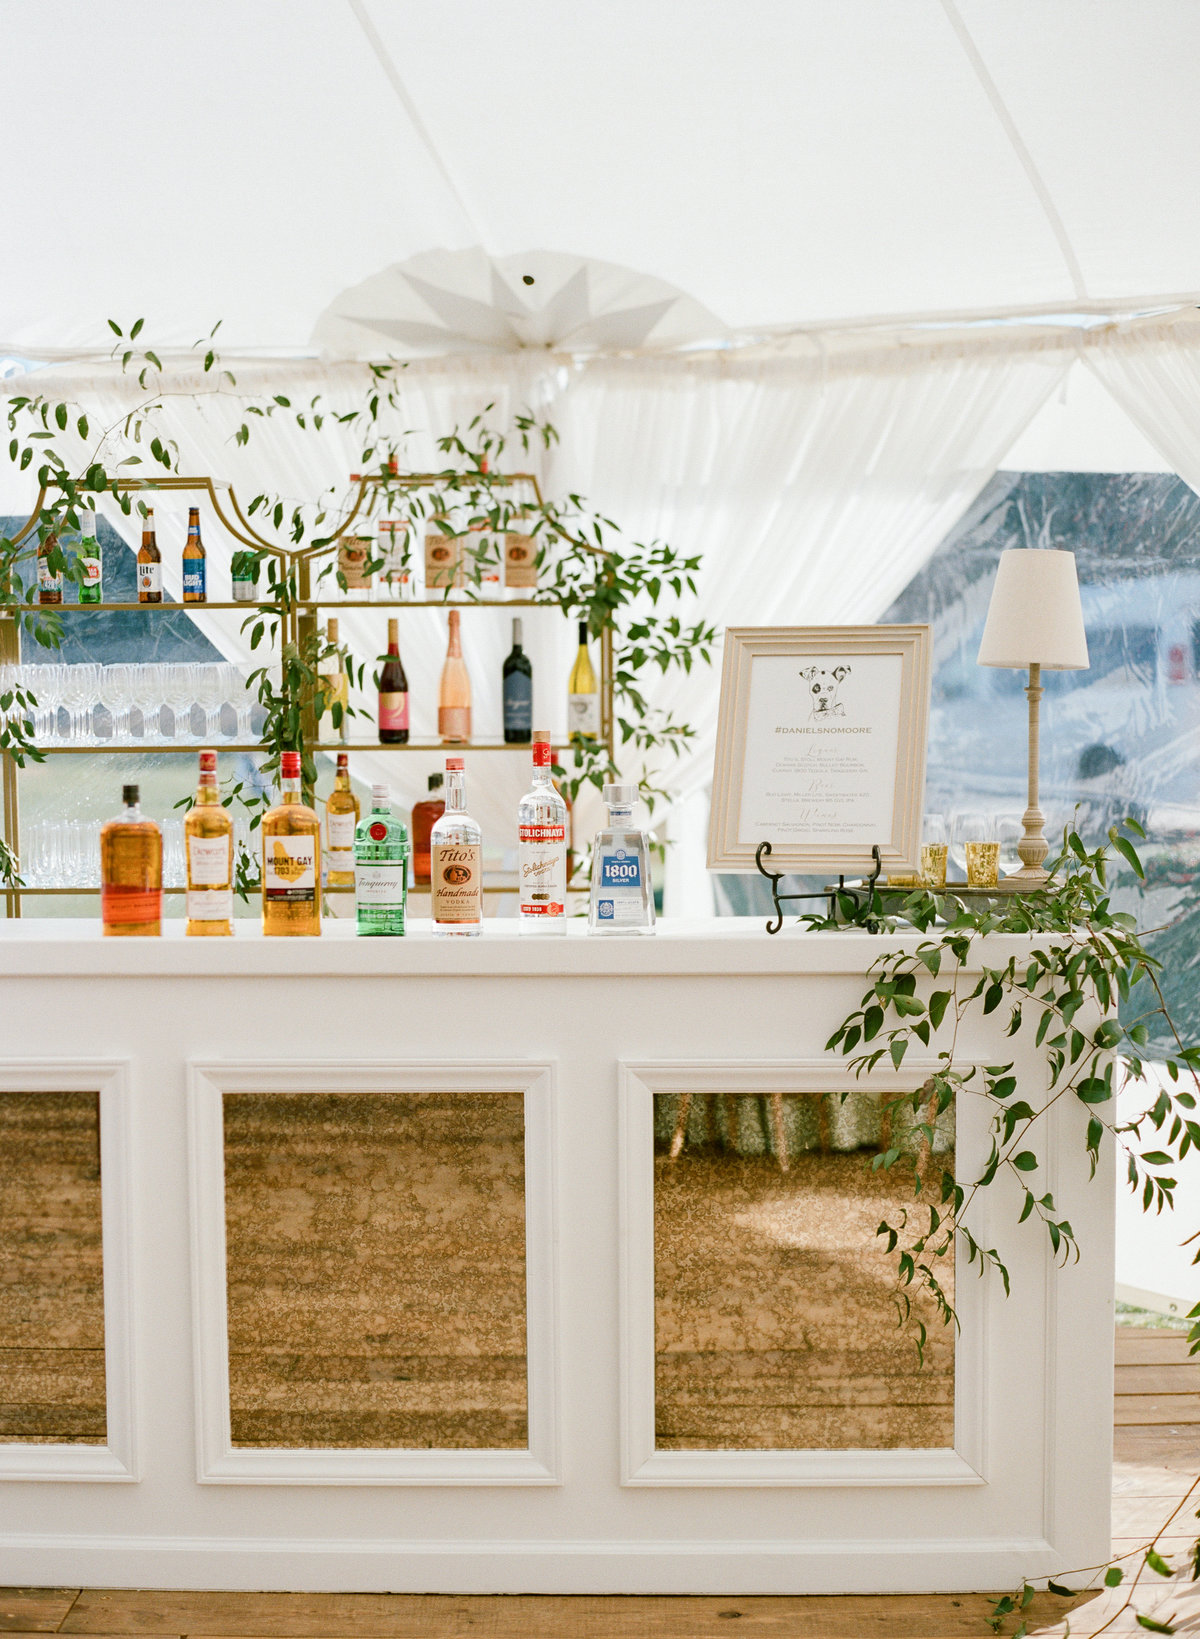 clink-events-greenville-wedding-planner-outdoor-tent-bar